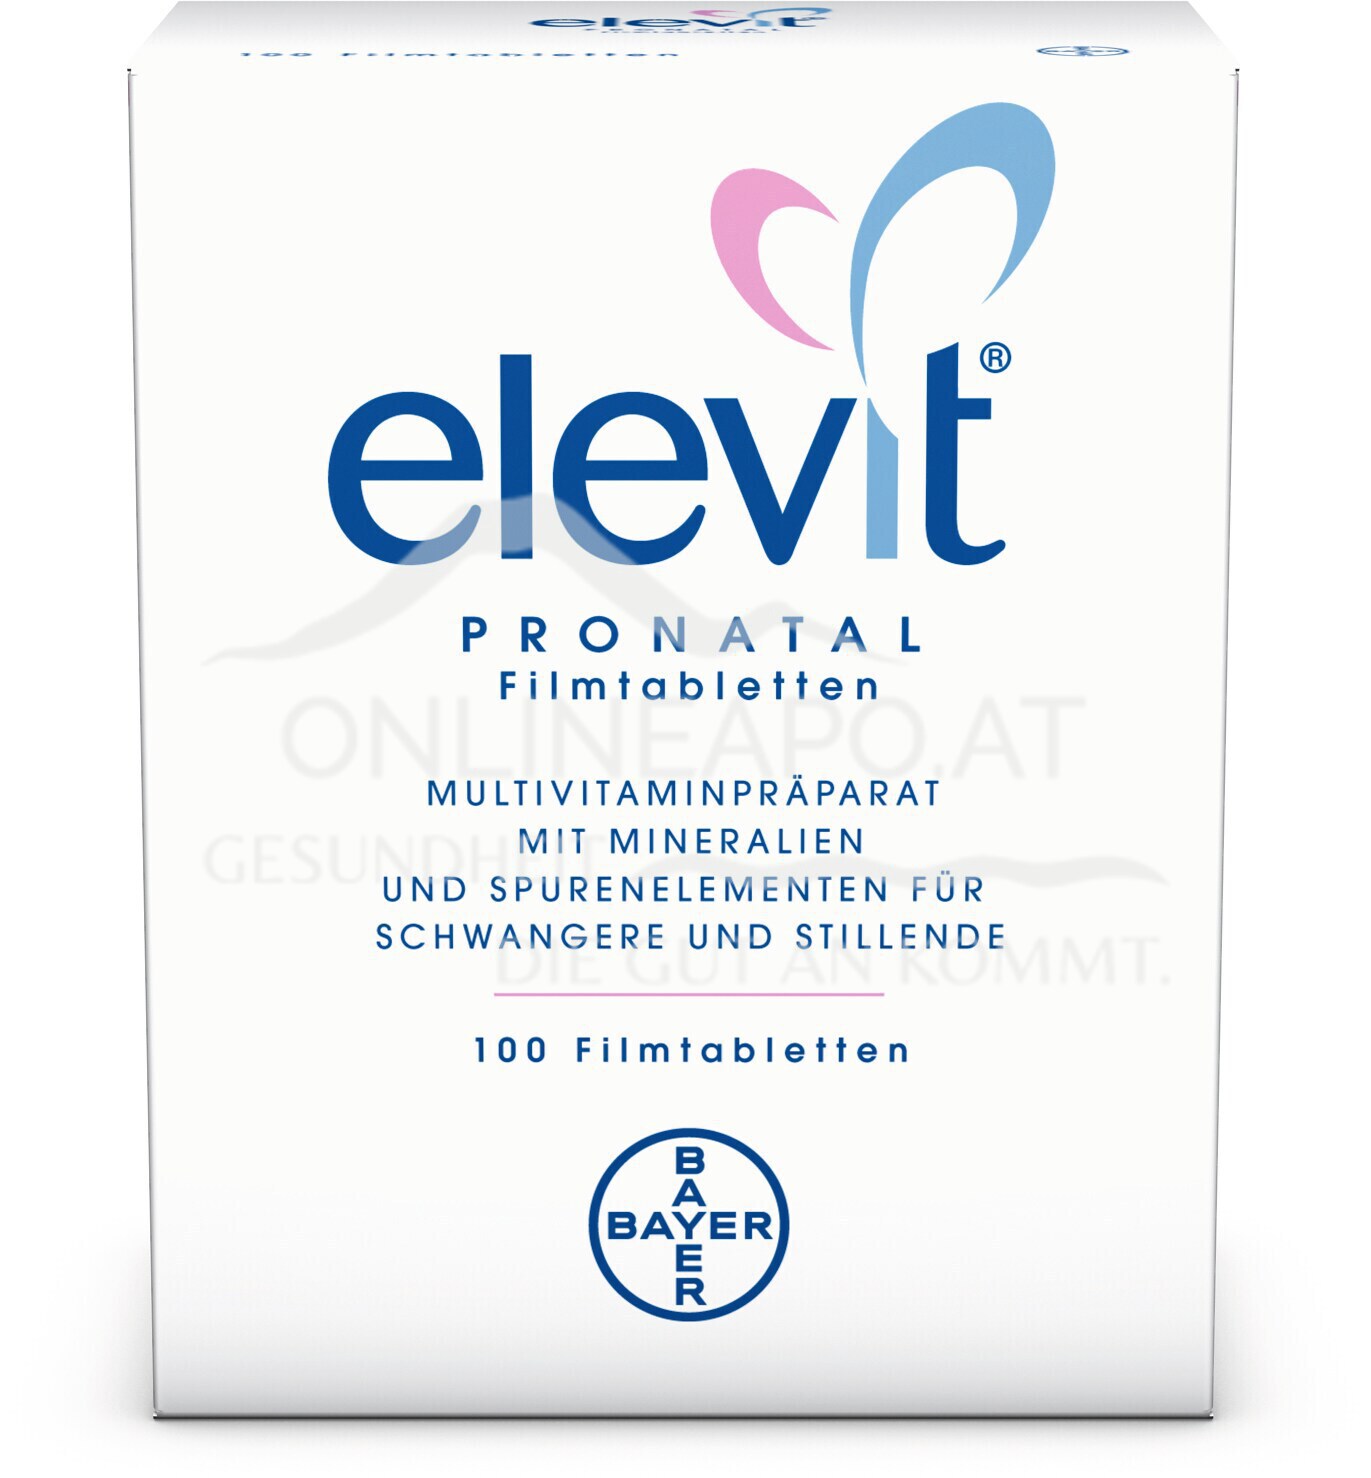 Elevit® pronatal Filmtabletten